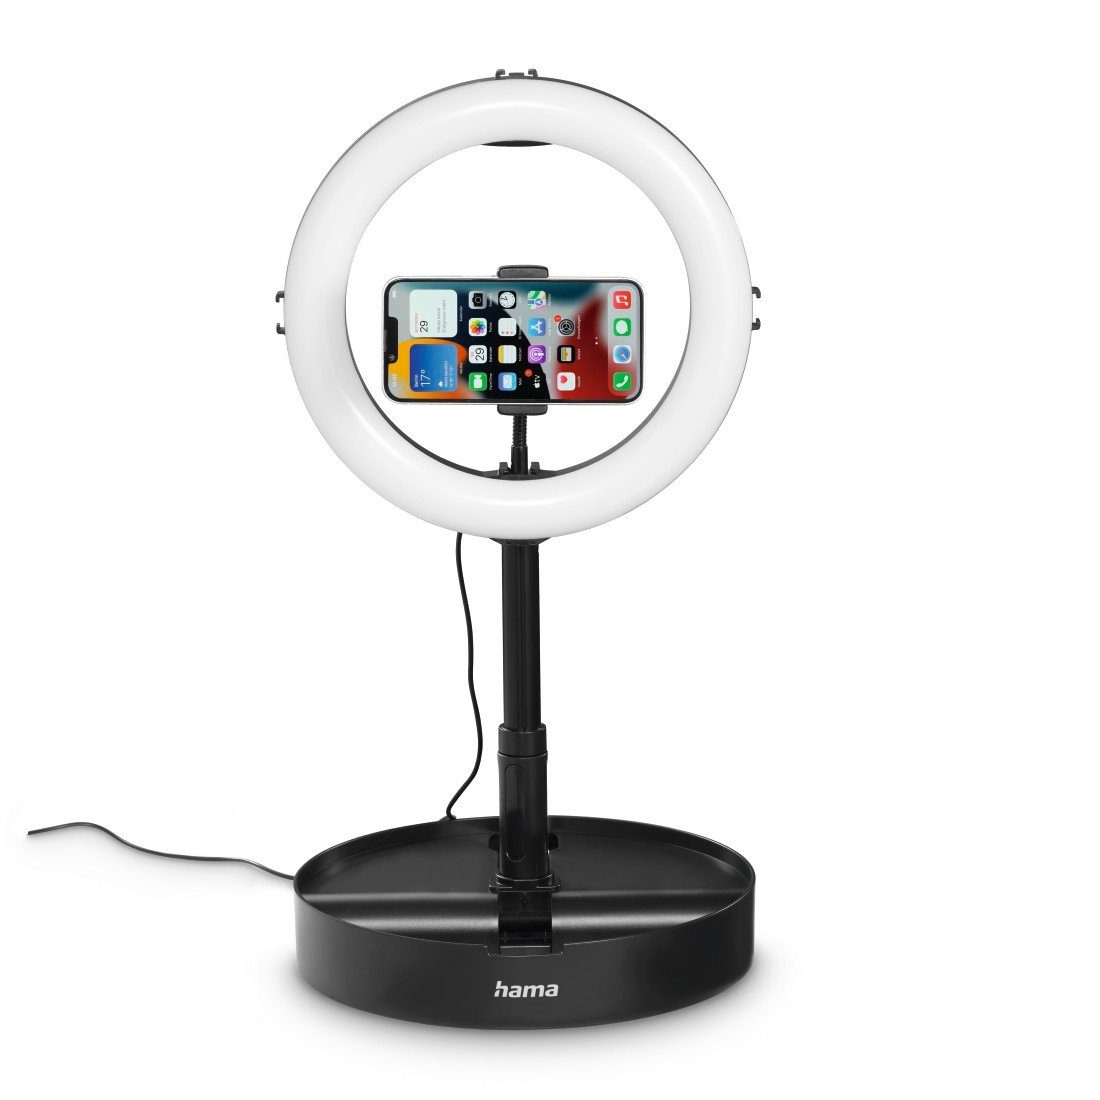 LED Handy, Hama Videokonferenz Mikrofon, mit Ringlicht Webcam, Ringleuchte für Stativ